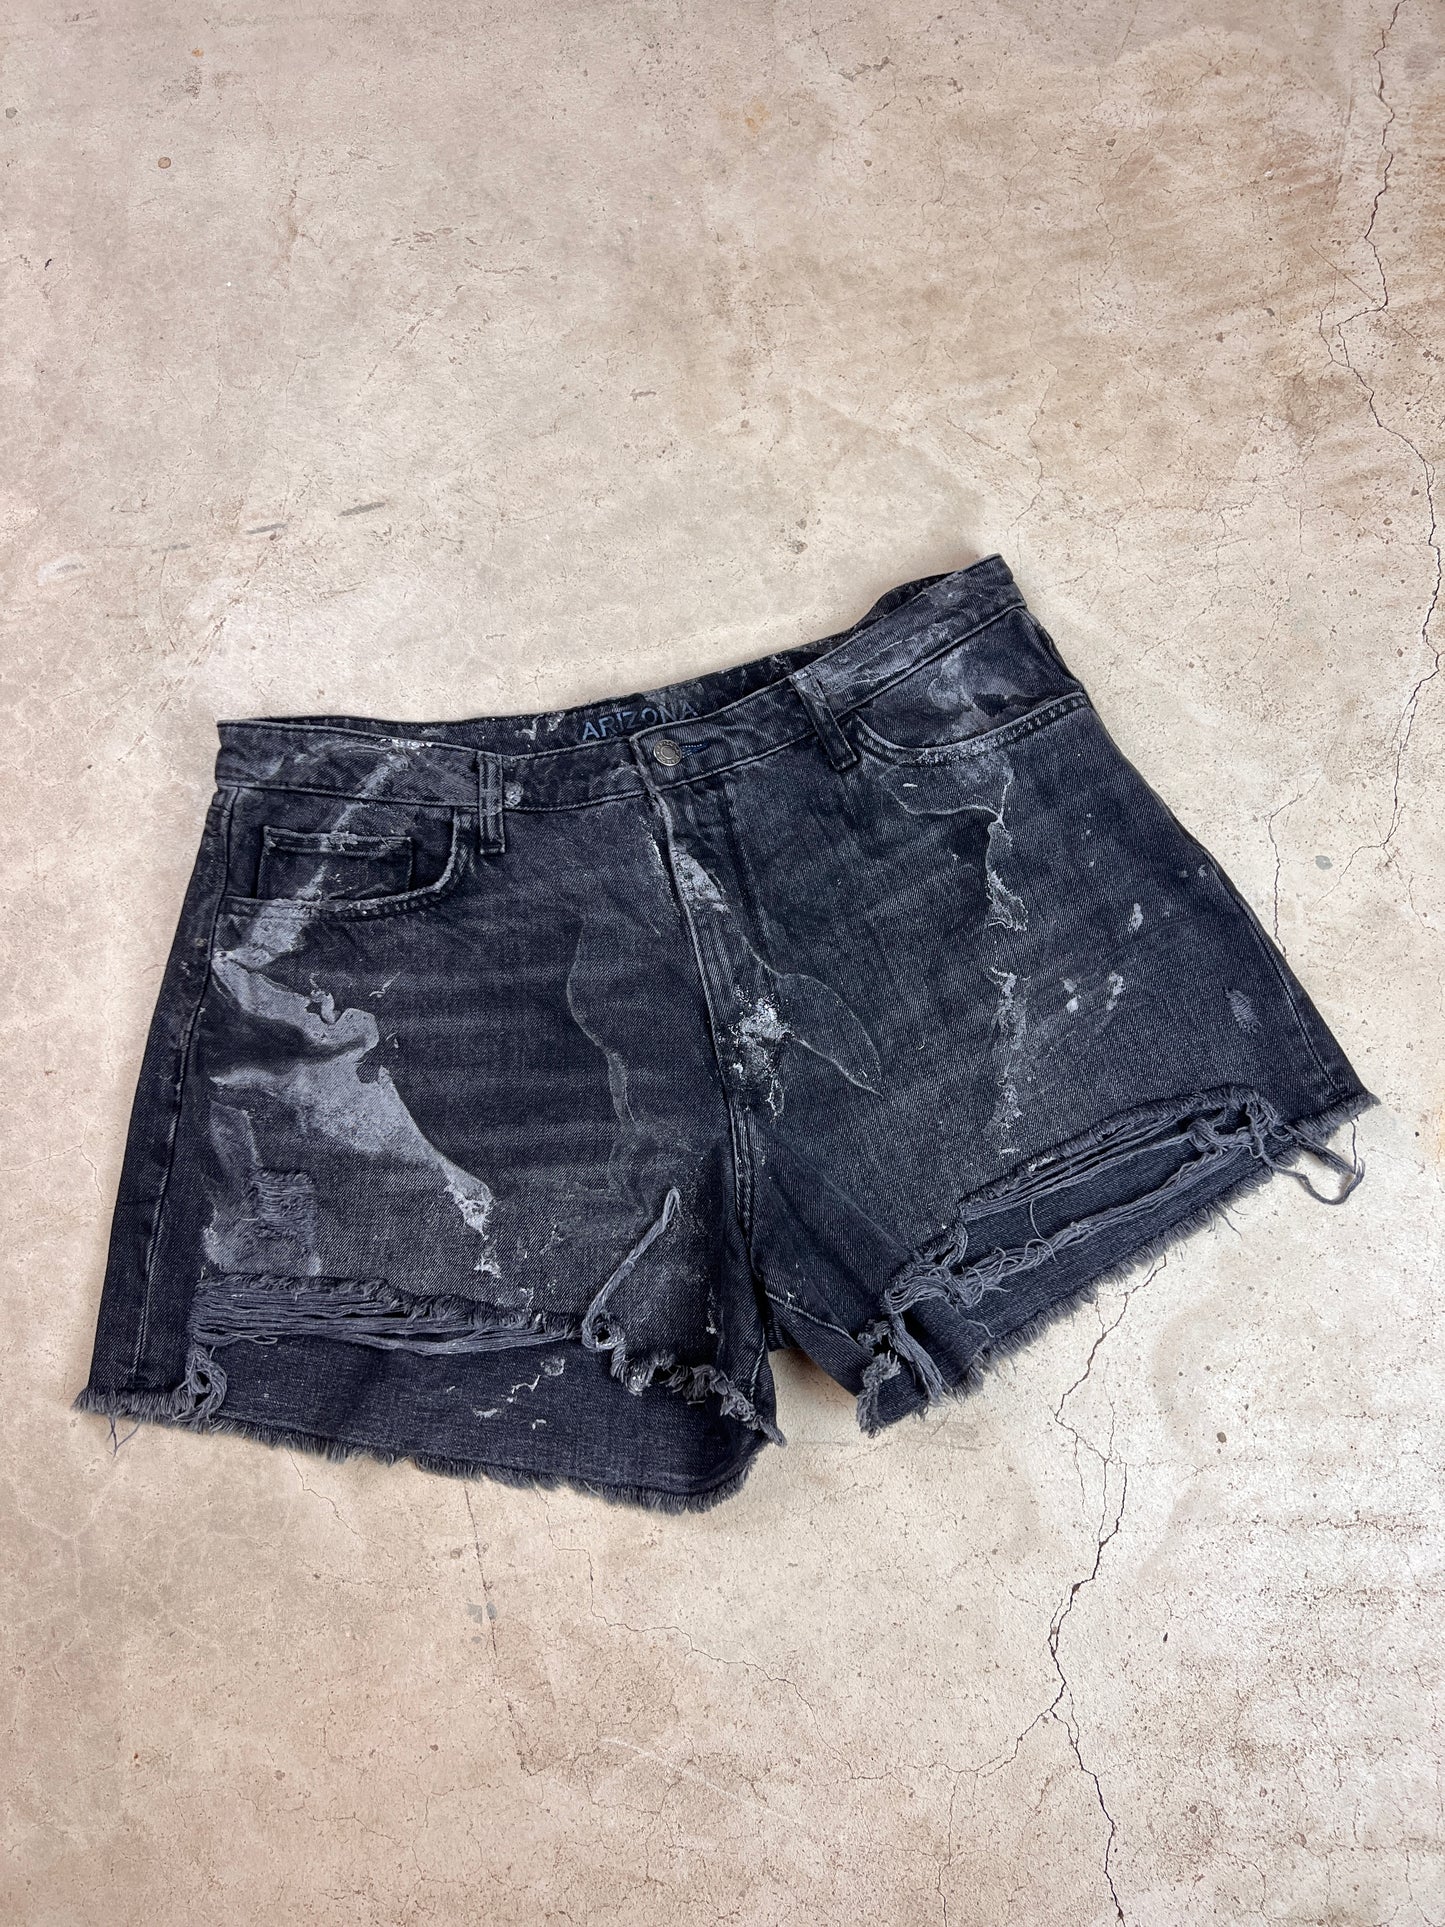 The Marbled Black Denim Shorts - 36"